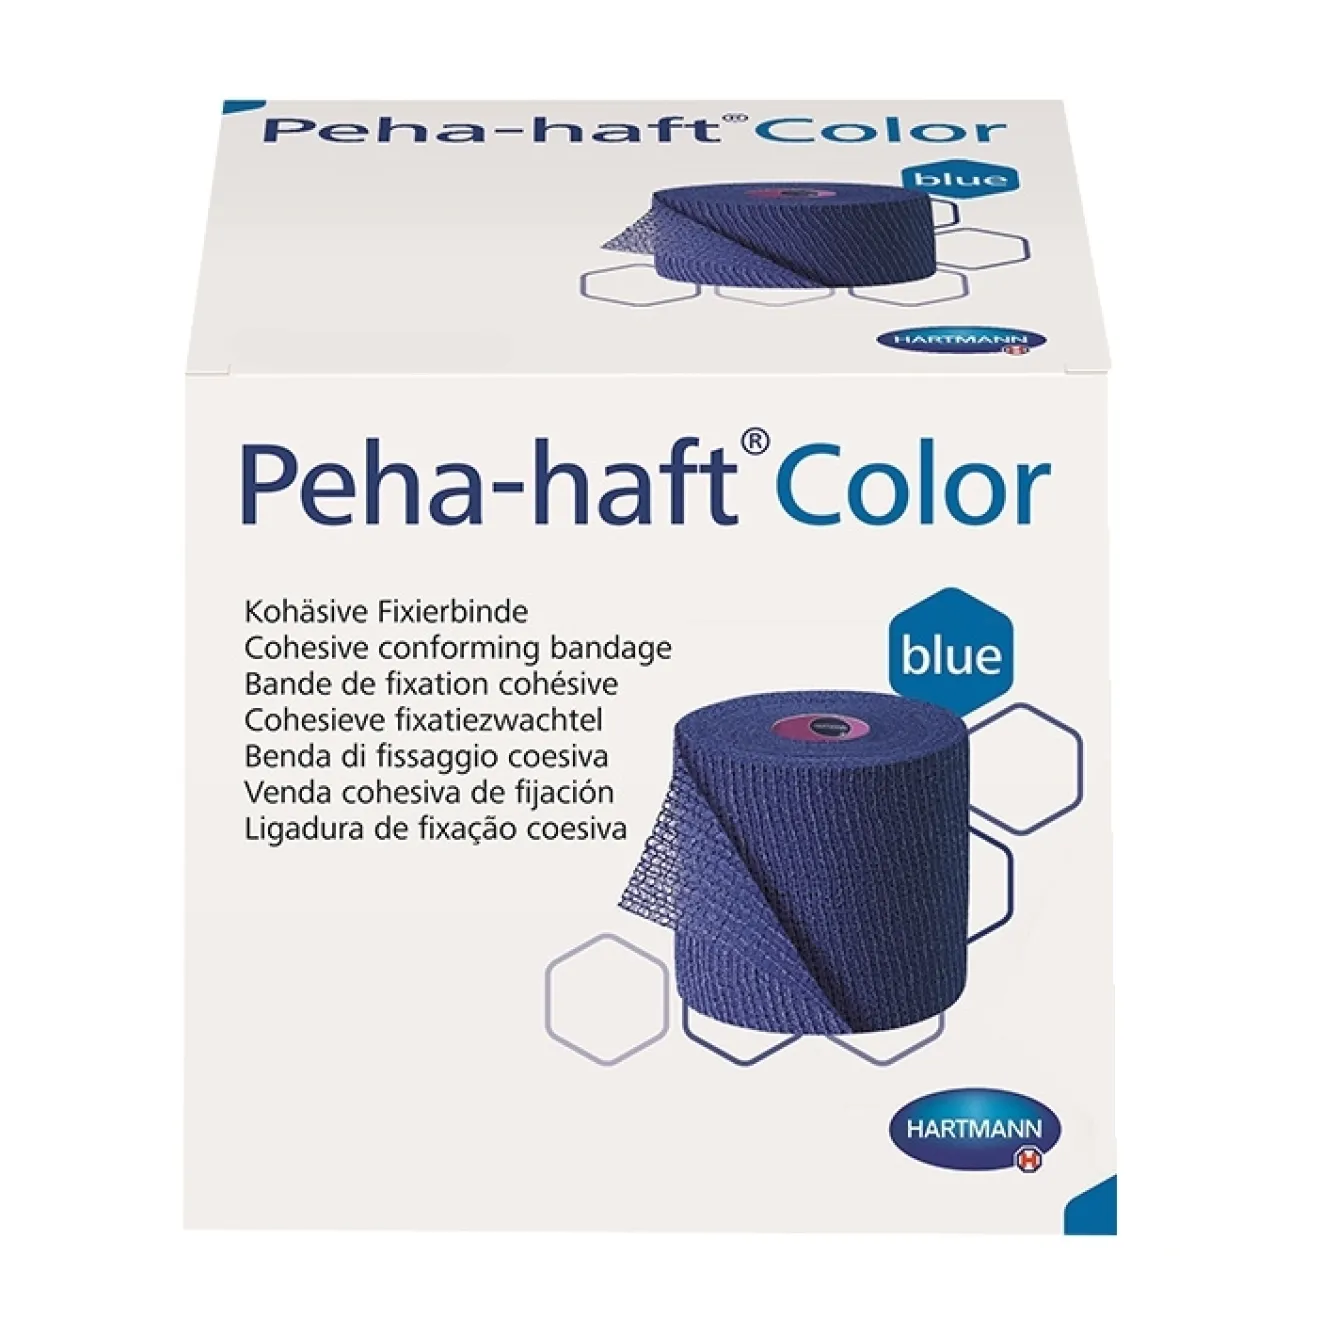 PEHA-HAFT Color Fixierbinde latexfrei 6 cmx21 m blau 1 ST